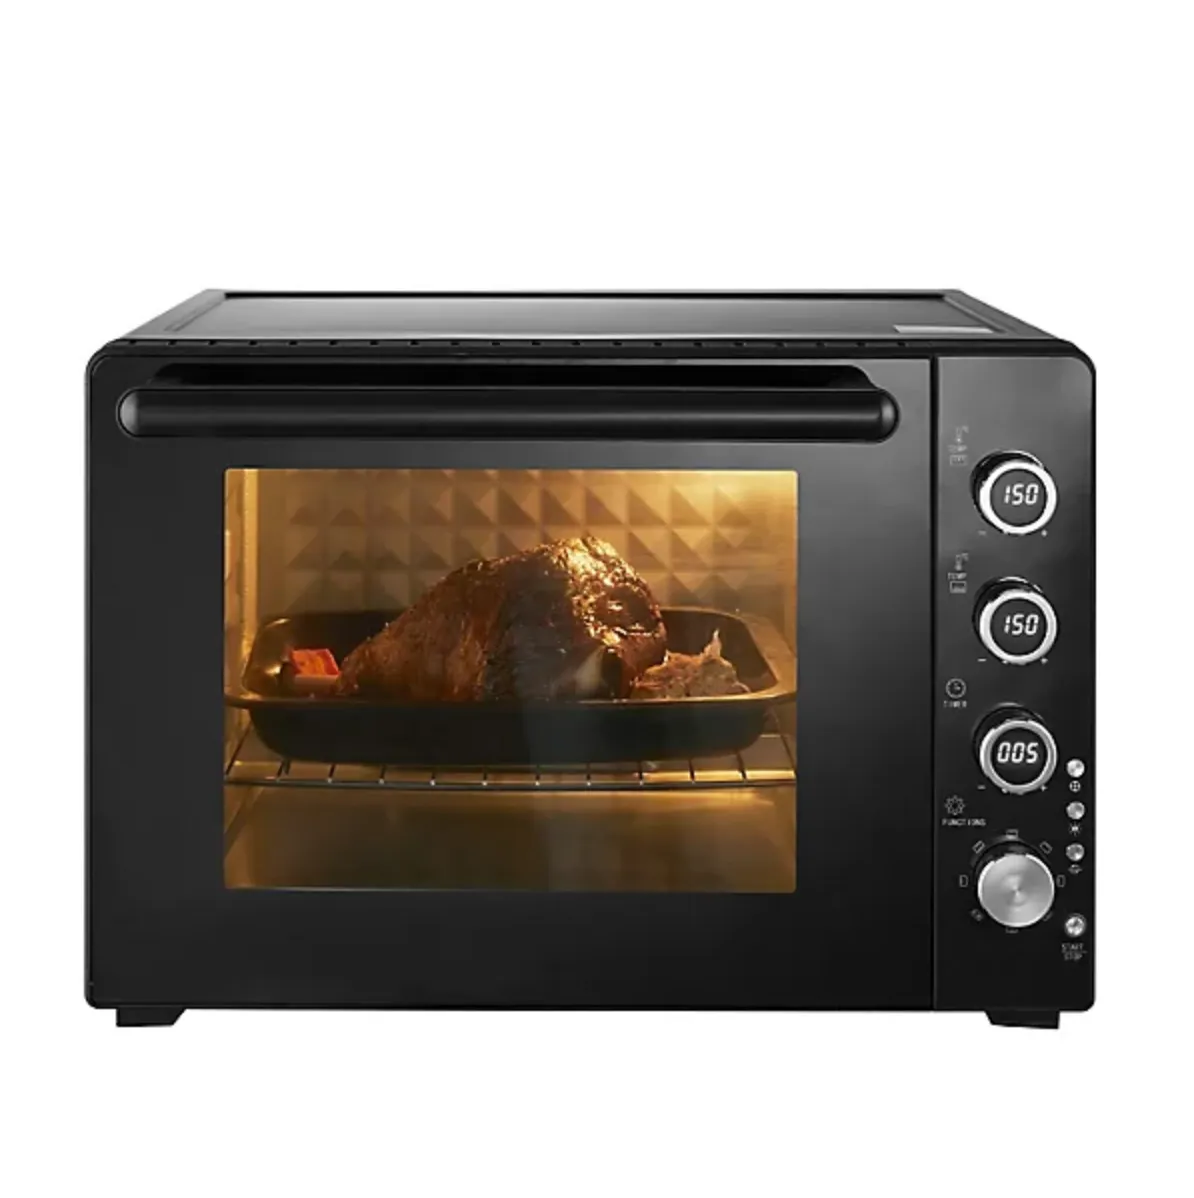 Lakeland Digital Mini Oven Black - £199.99 £99.99 (save £100)